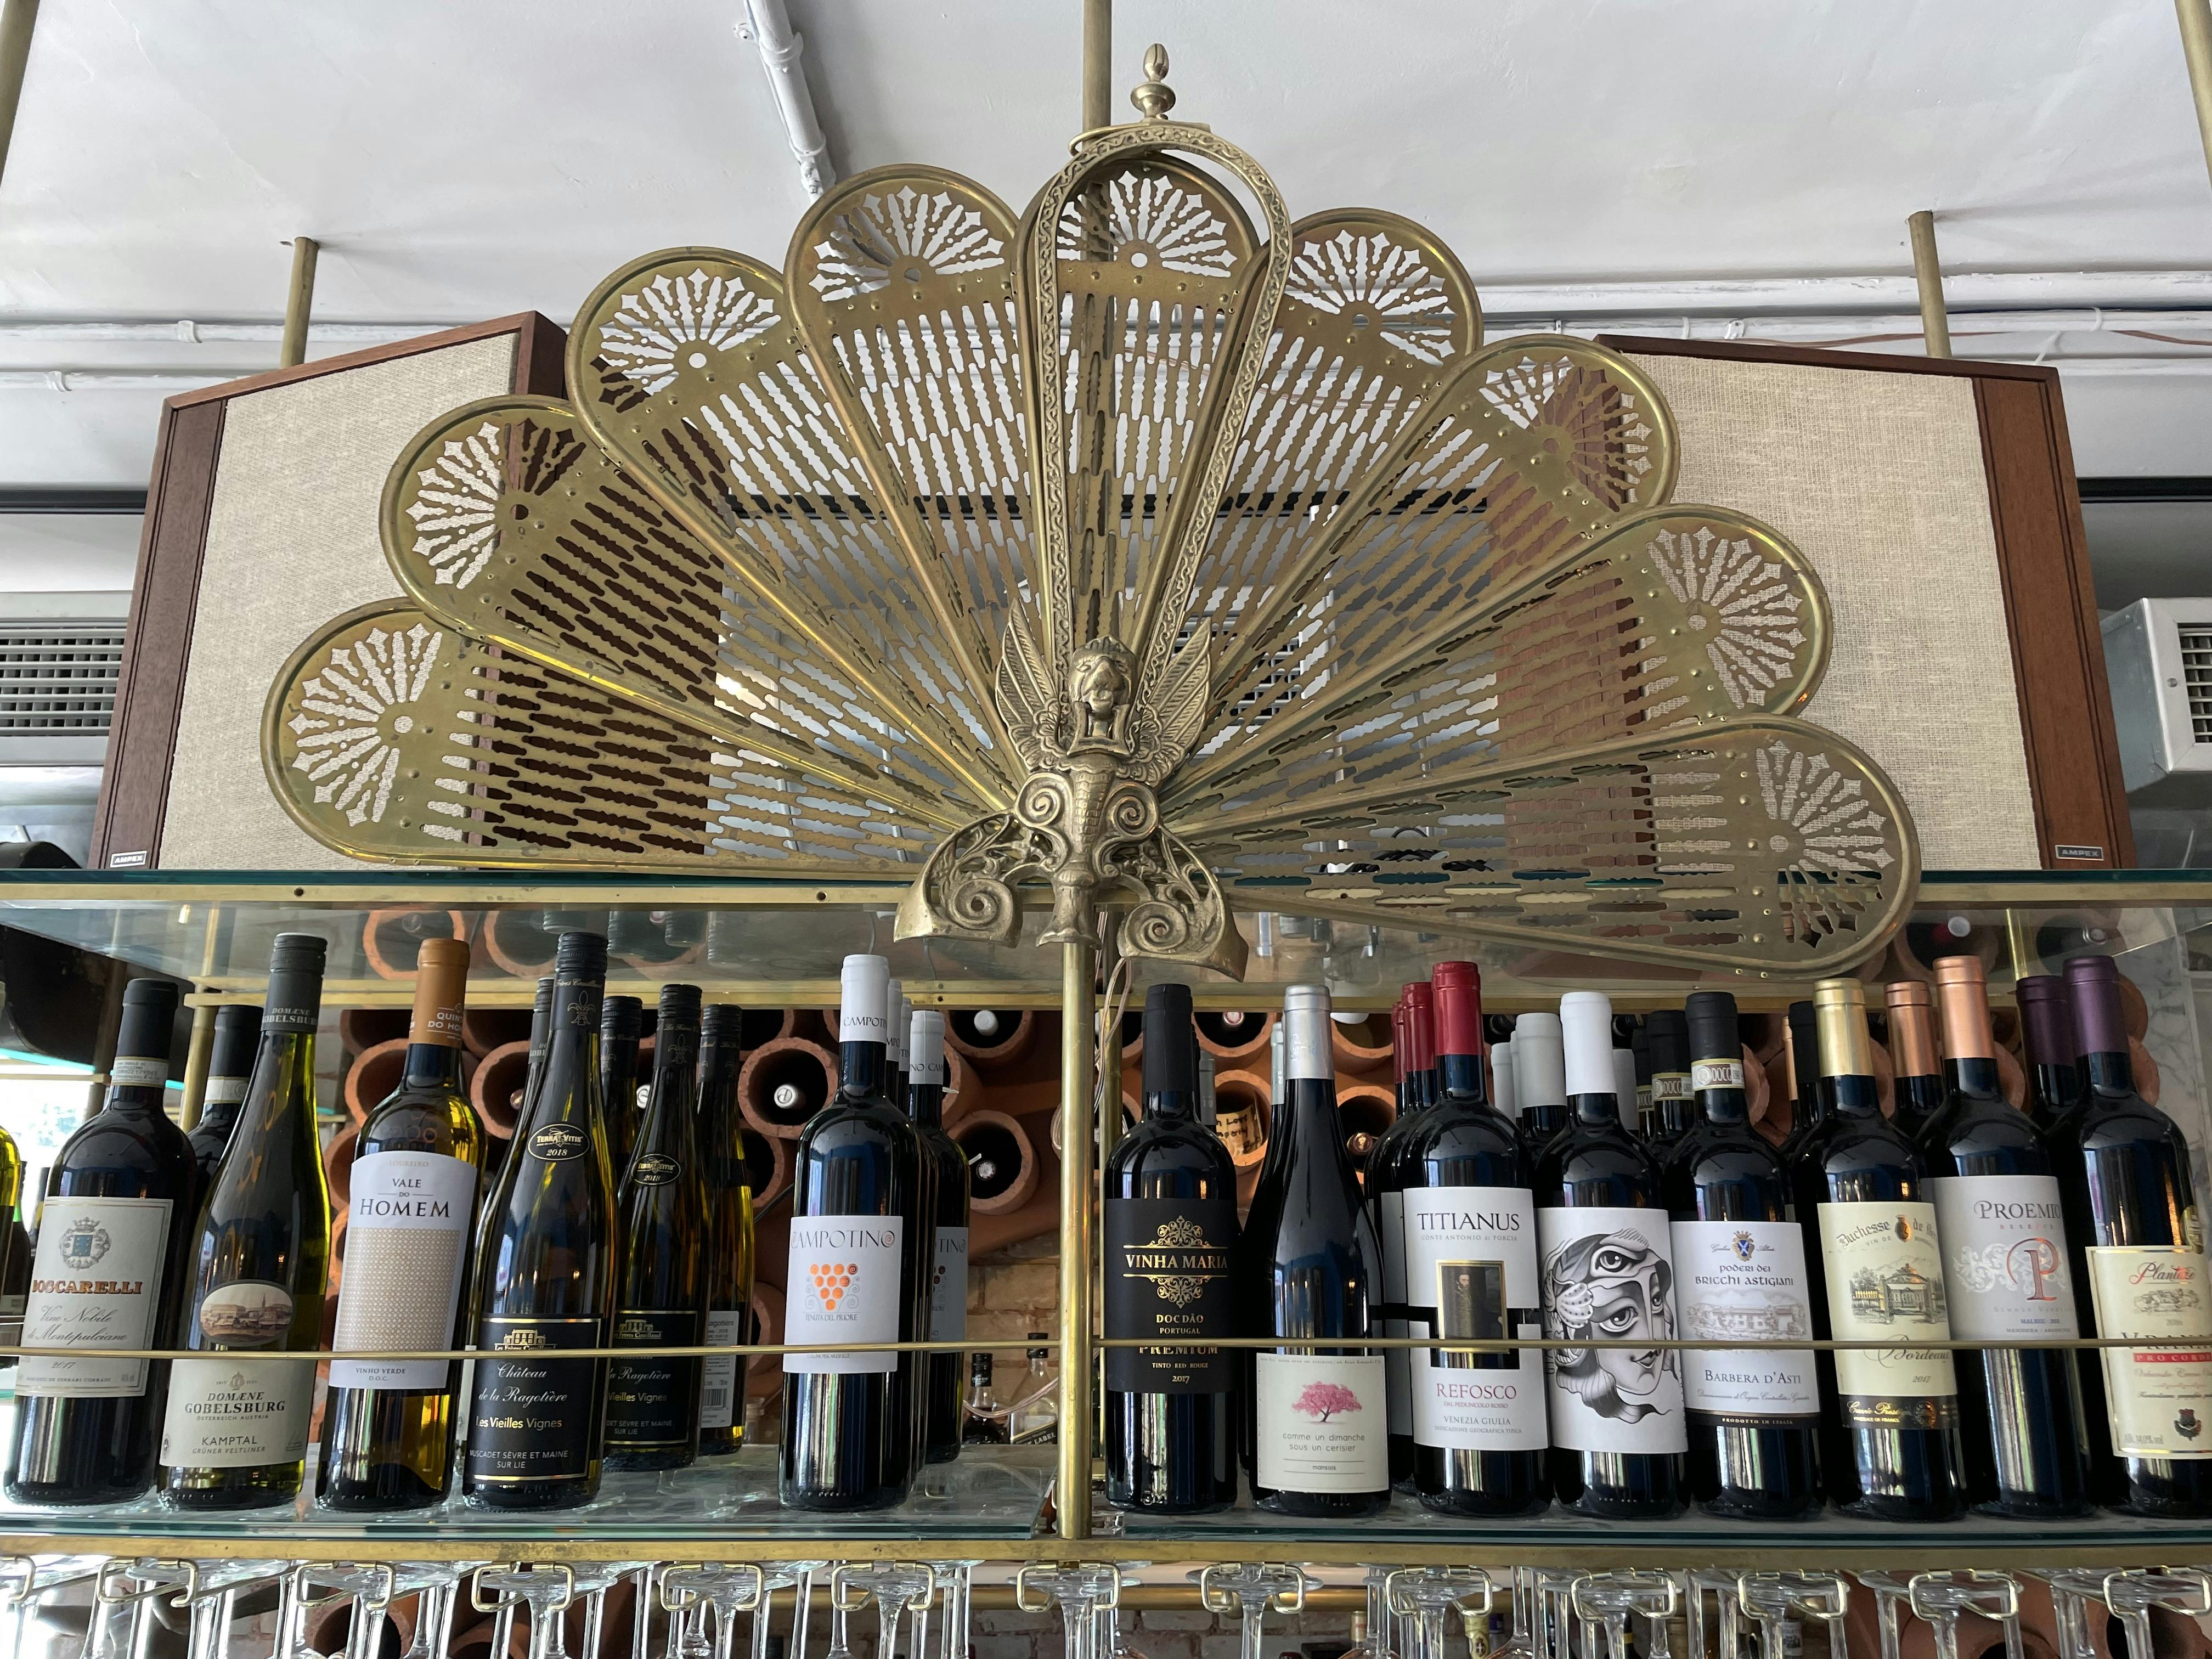 Gardel's wine shelf